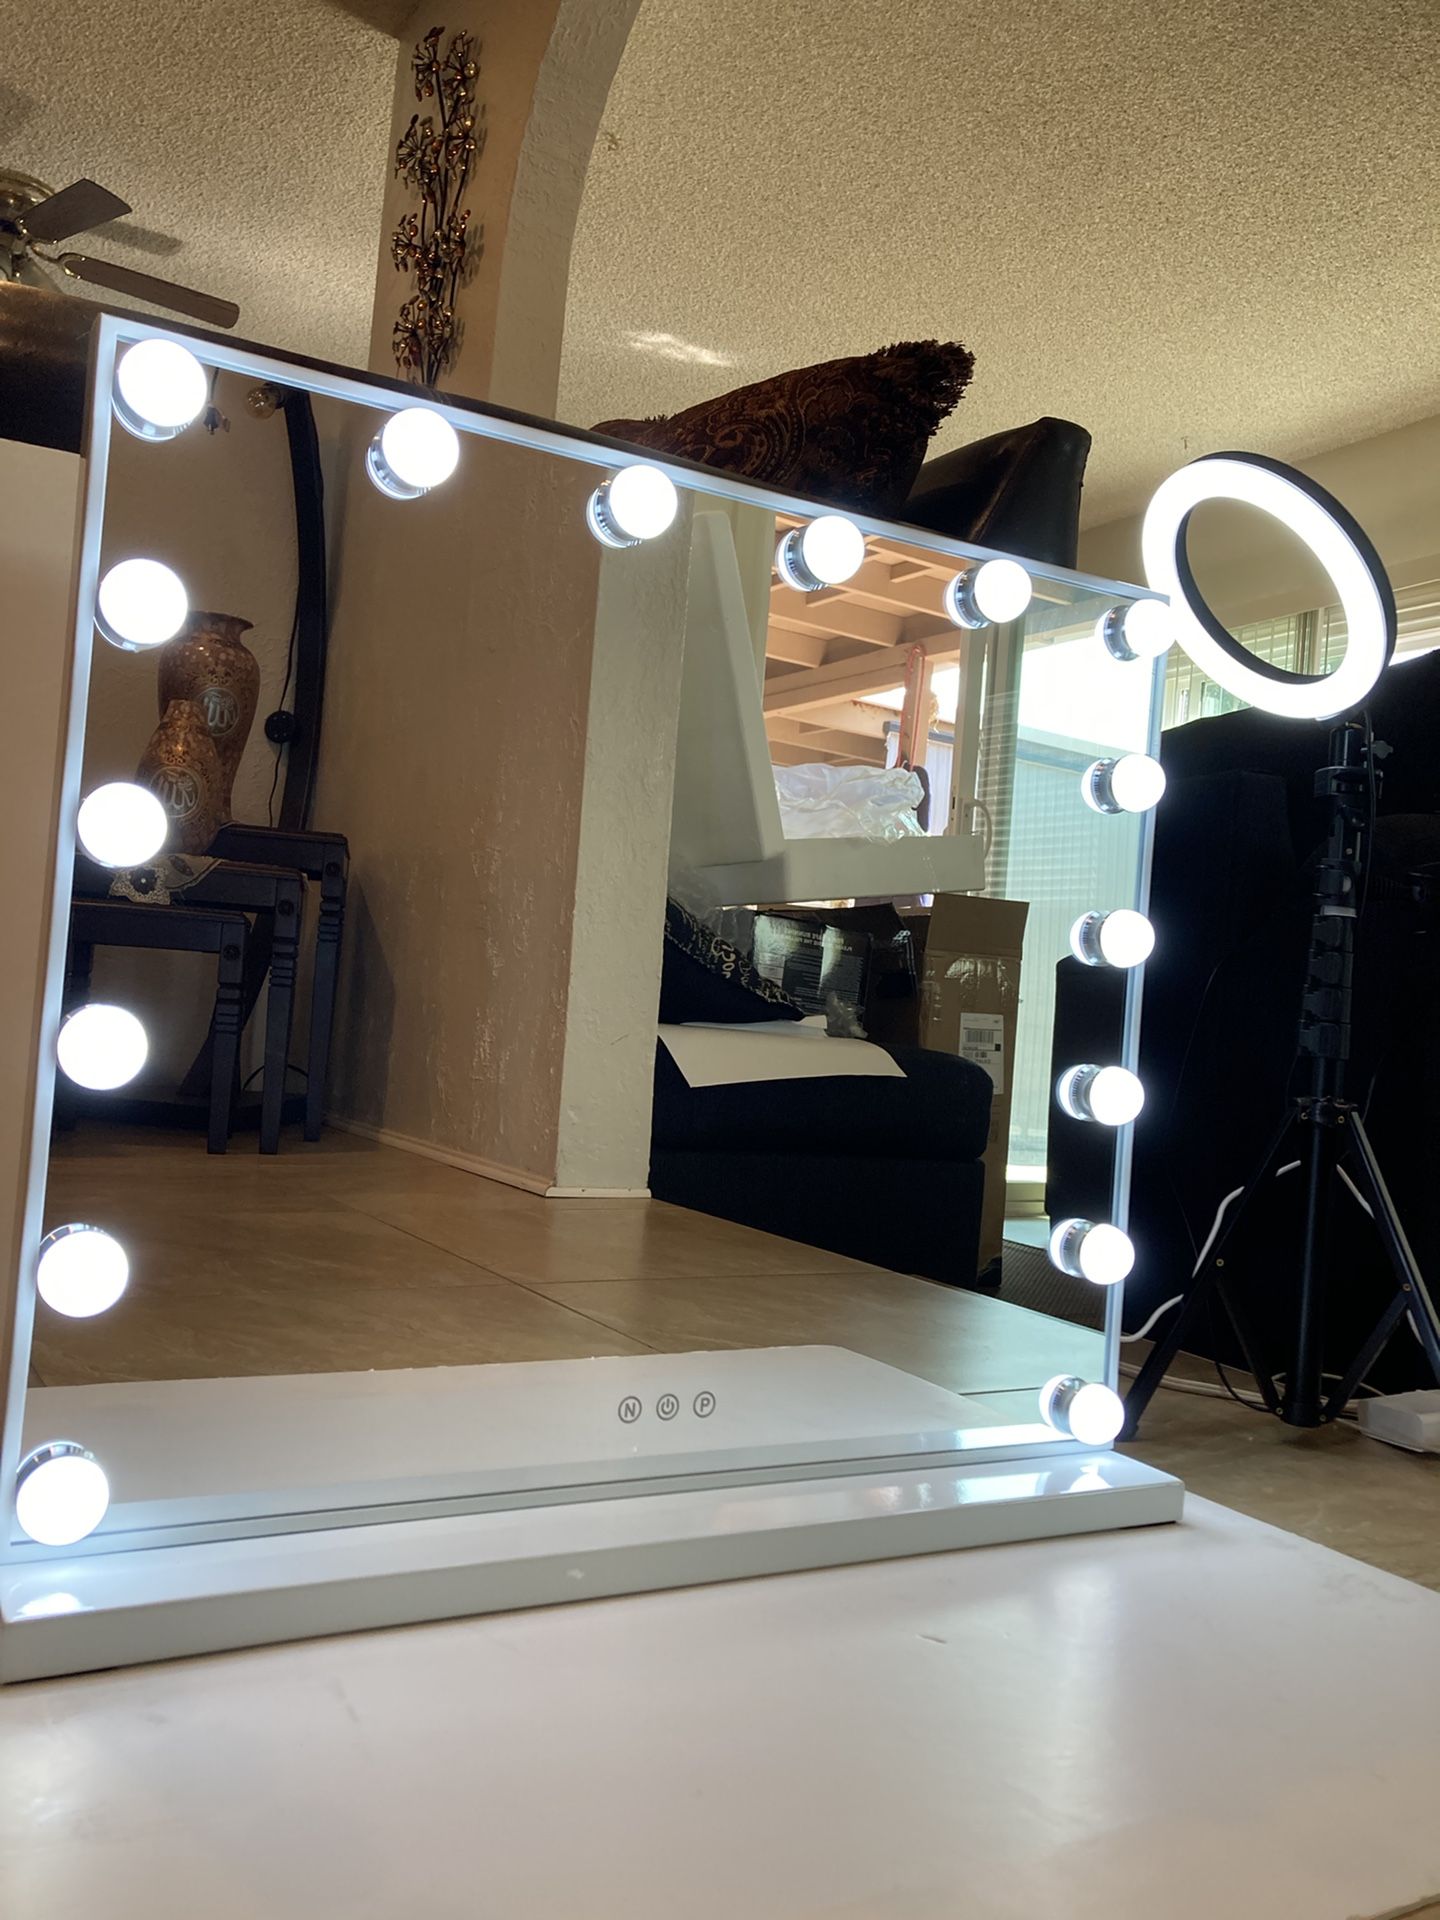 23” Hollywood makeup Mirror Vanity Mirror LED light Dimmer